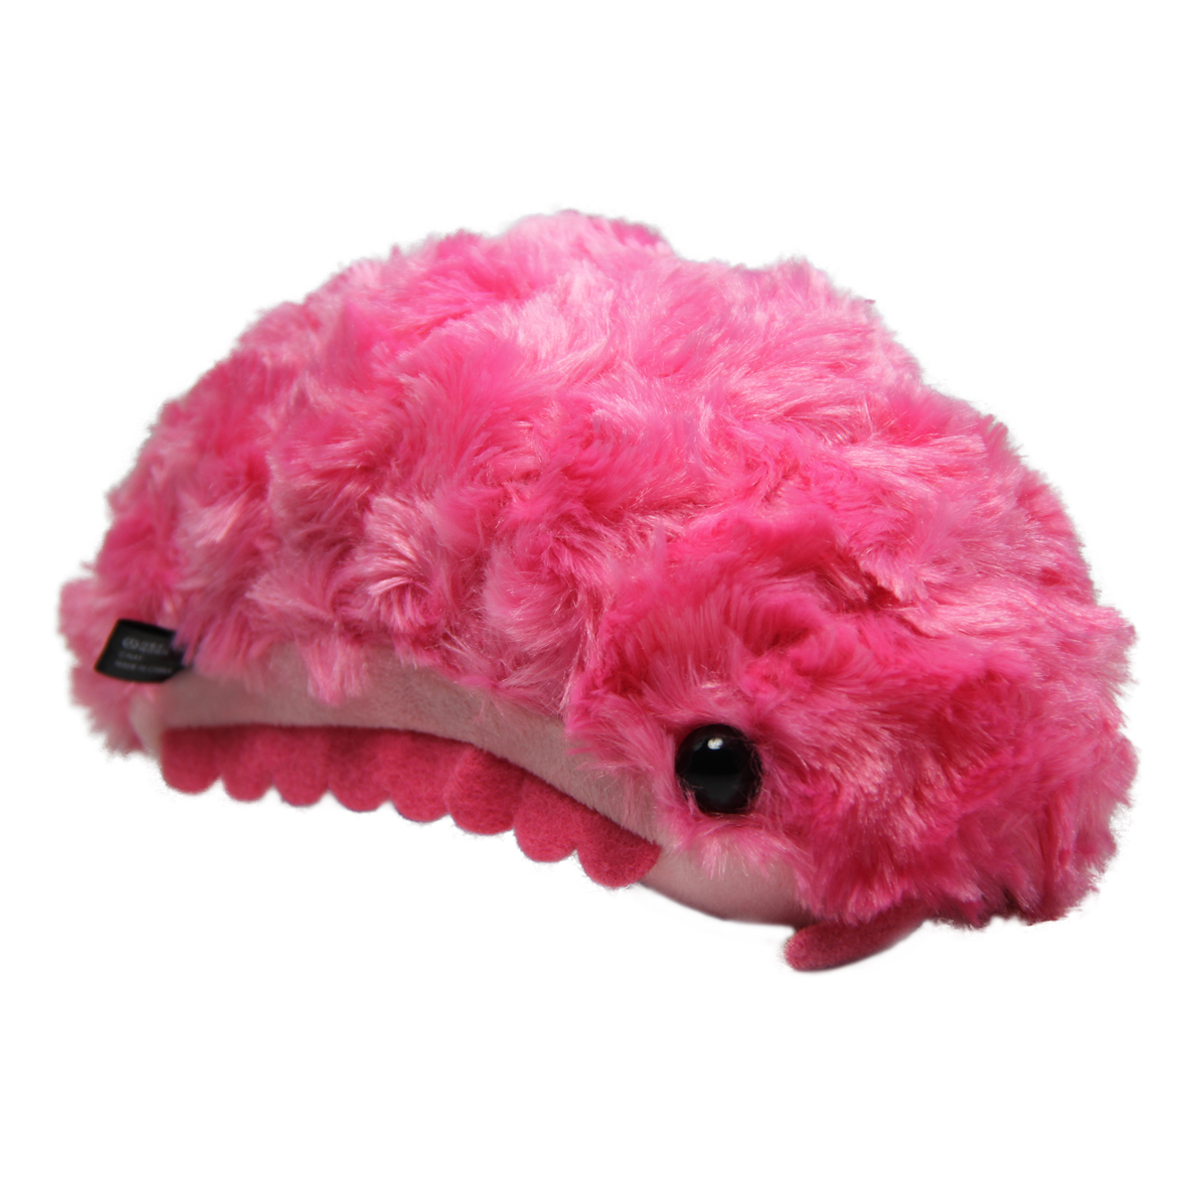 Roly Poly Plush Doll Toy Dangomushi Super Soft Larva Bug Stuffed Animal Pink 6" 